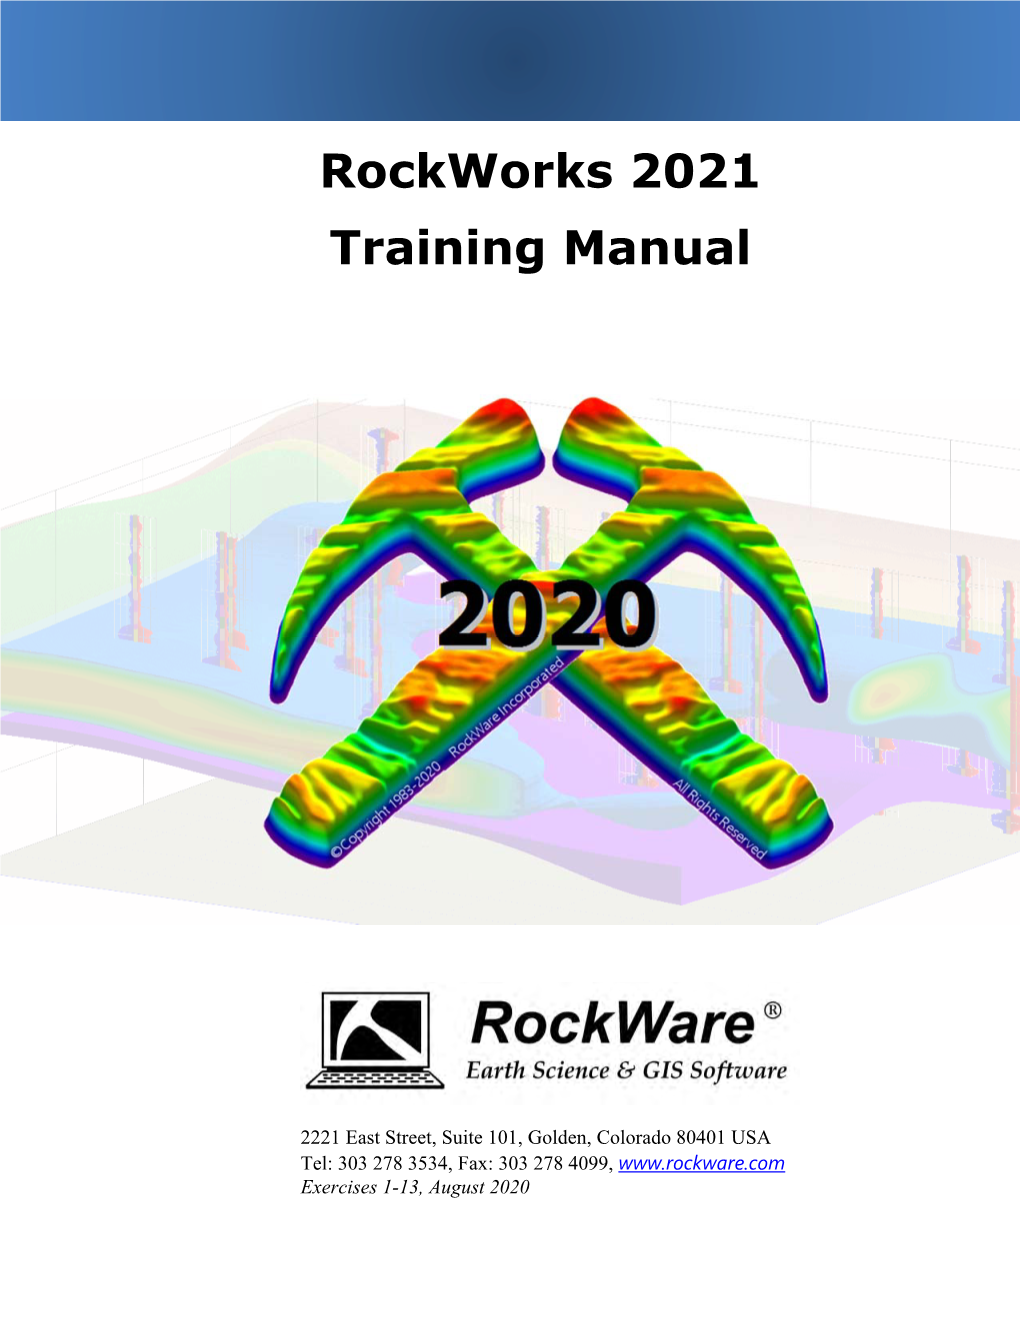 Rockworks 2021 Training Manual